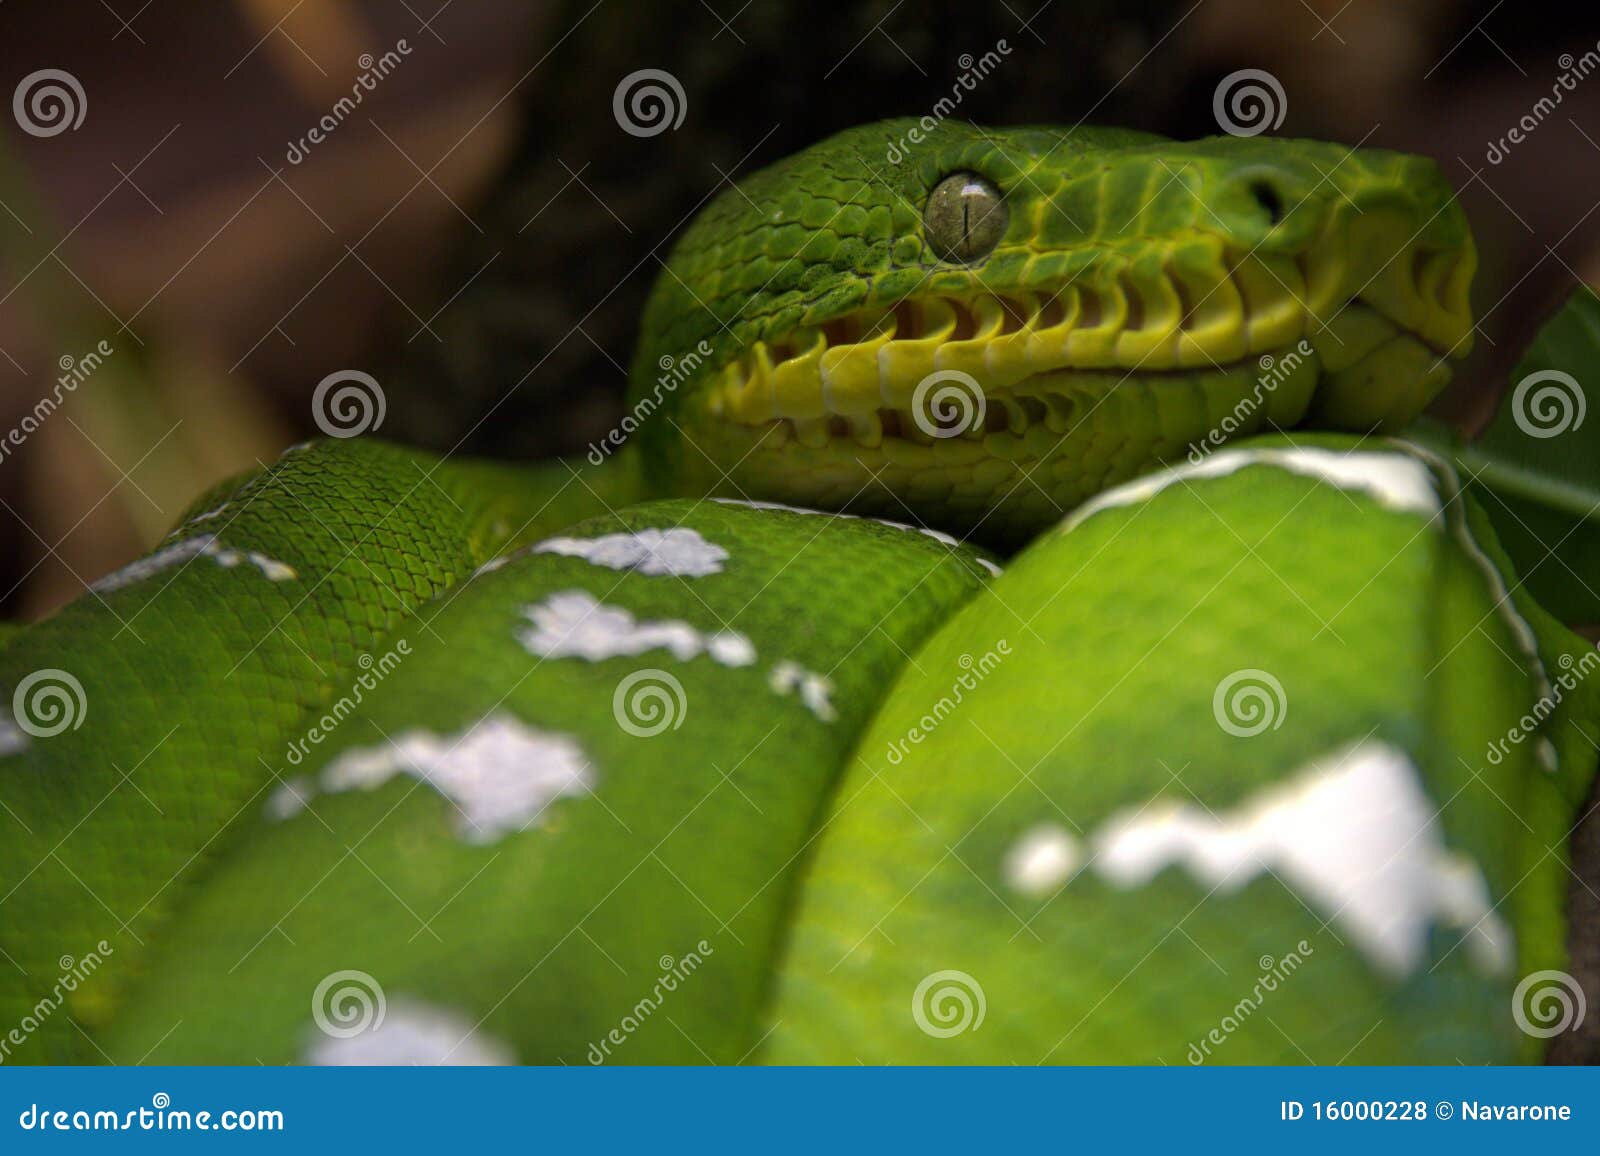 Emerald tree boa snake stock photo. Image of nature, details - 160002281300 x 956